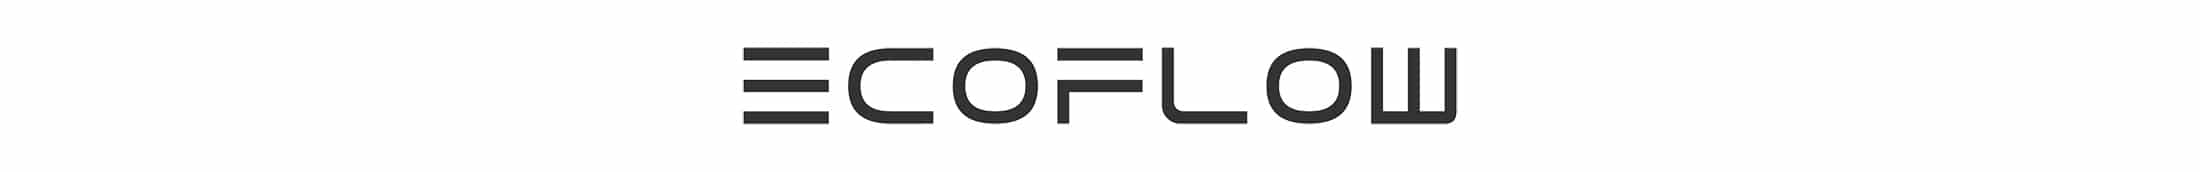 ecoflow logo